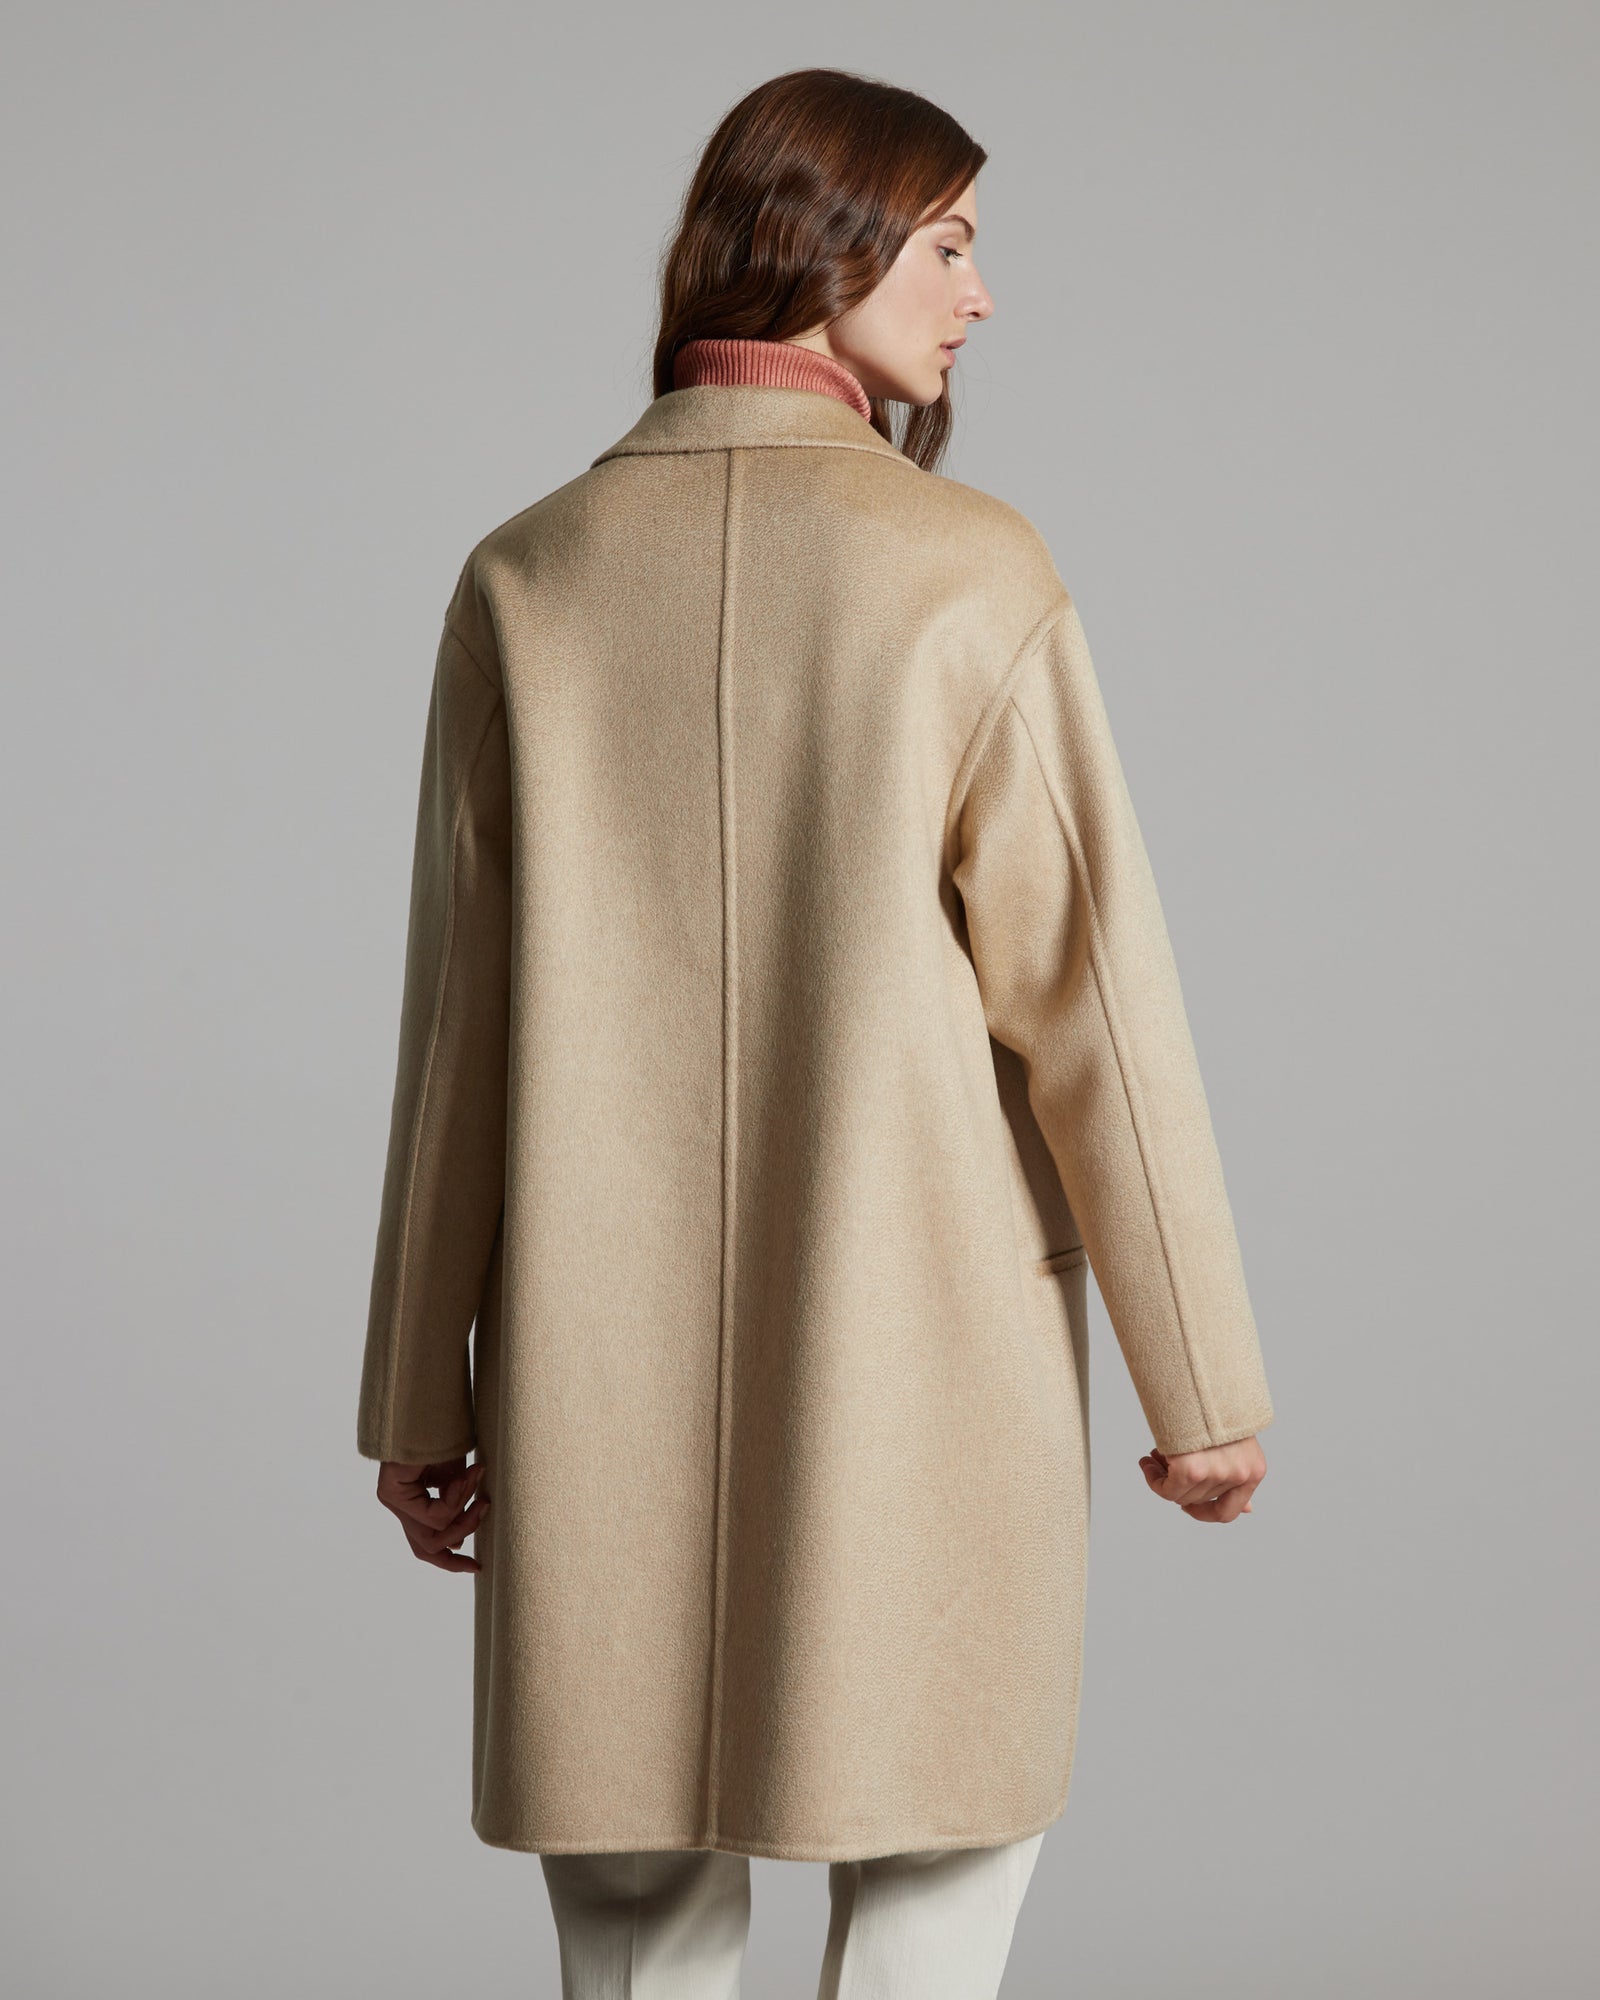 Beige coat in double cashmere